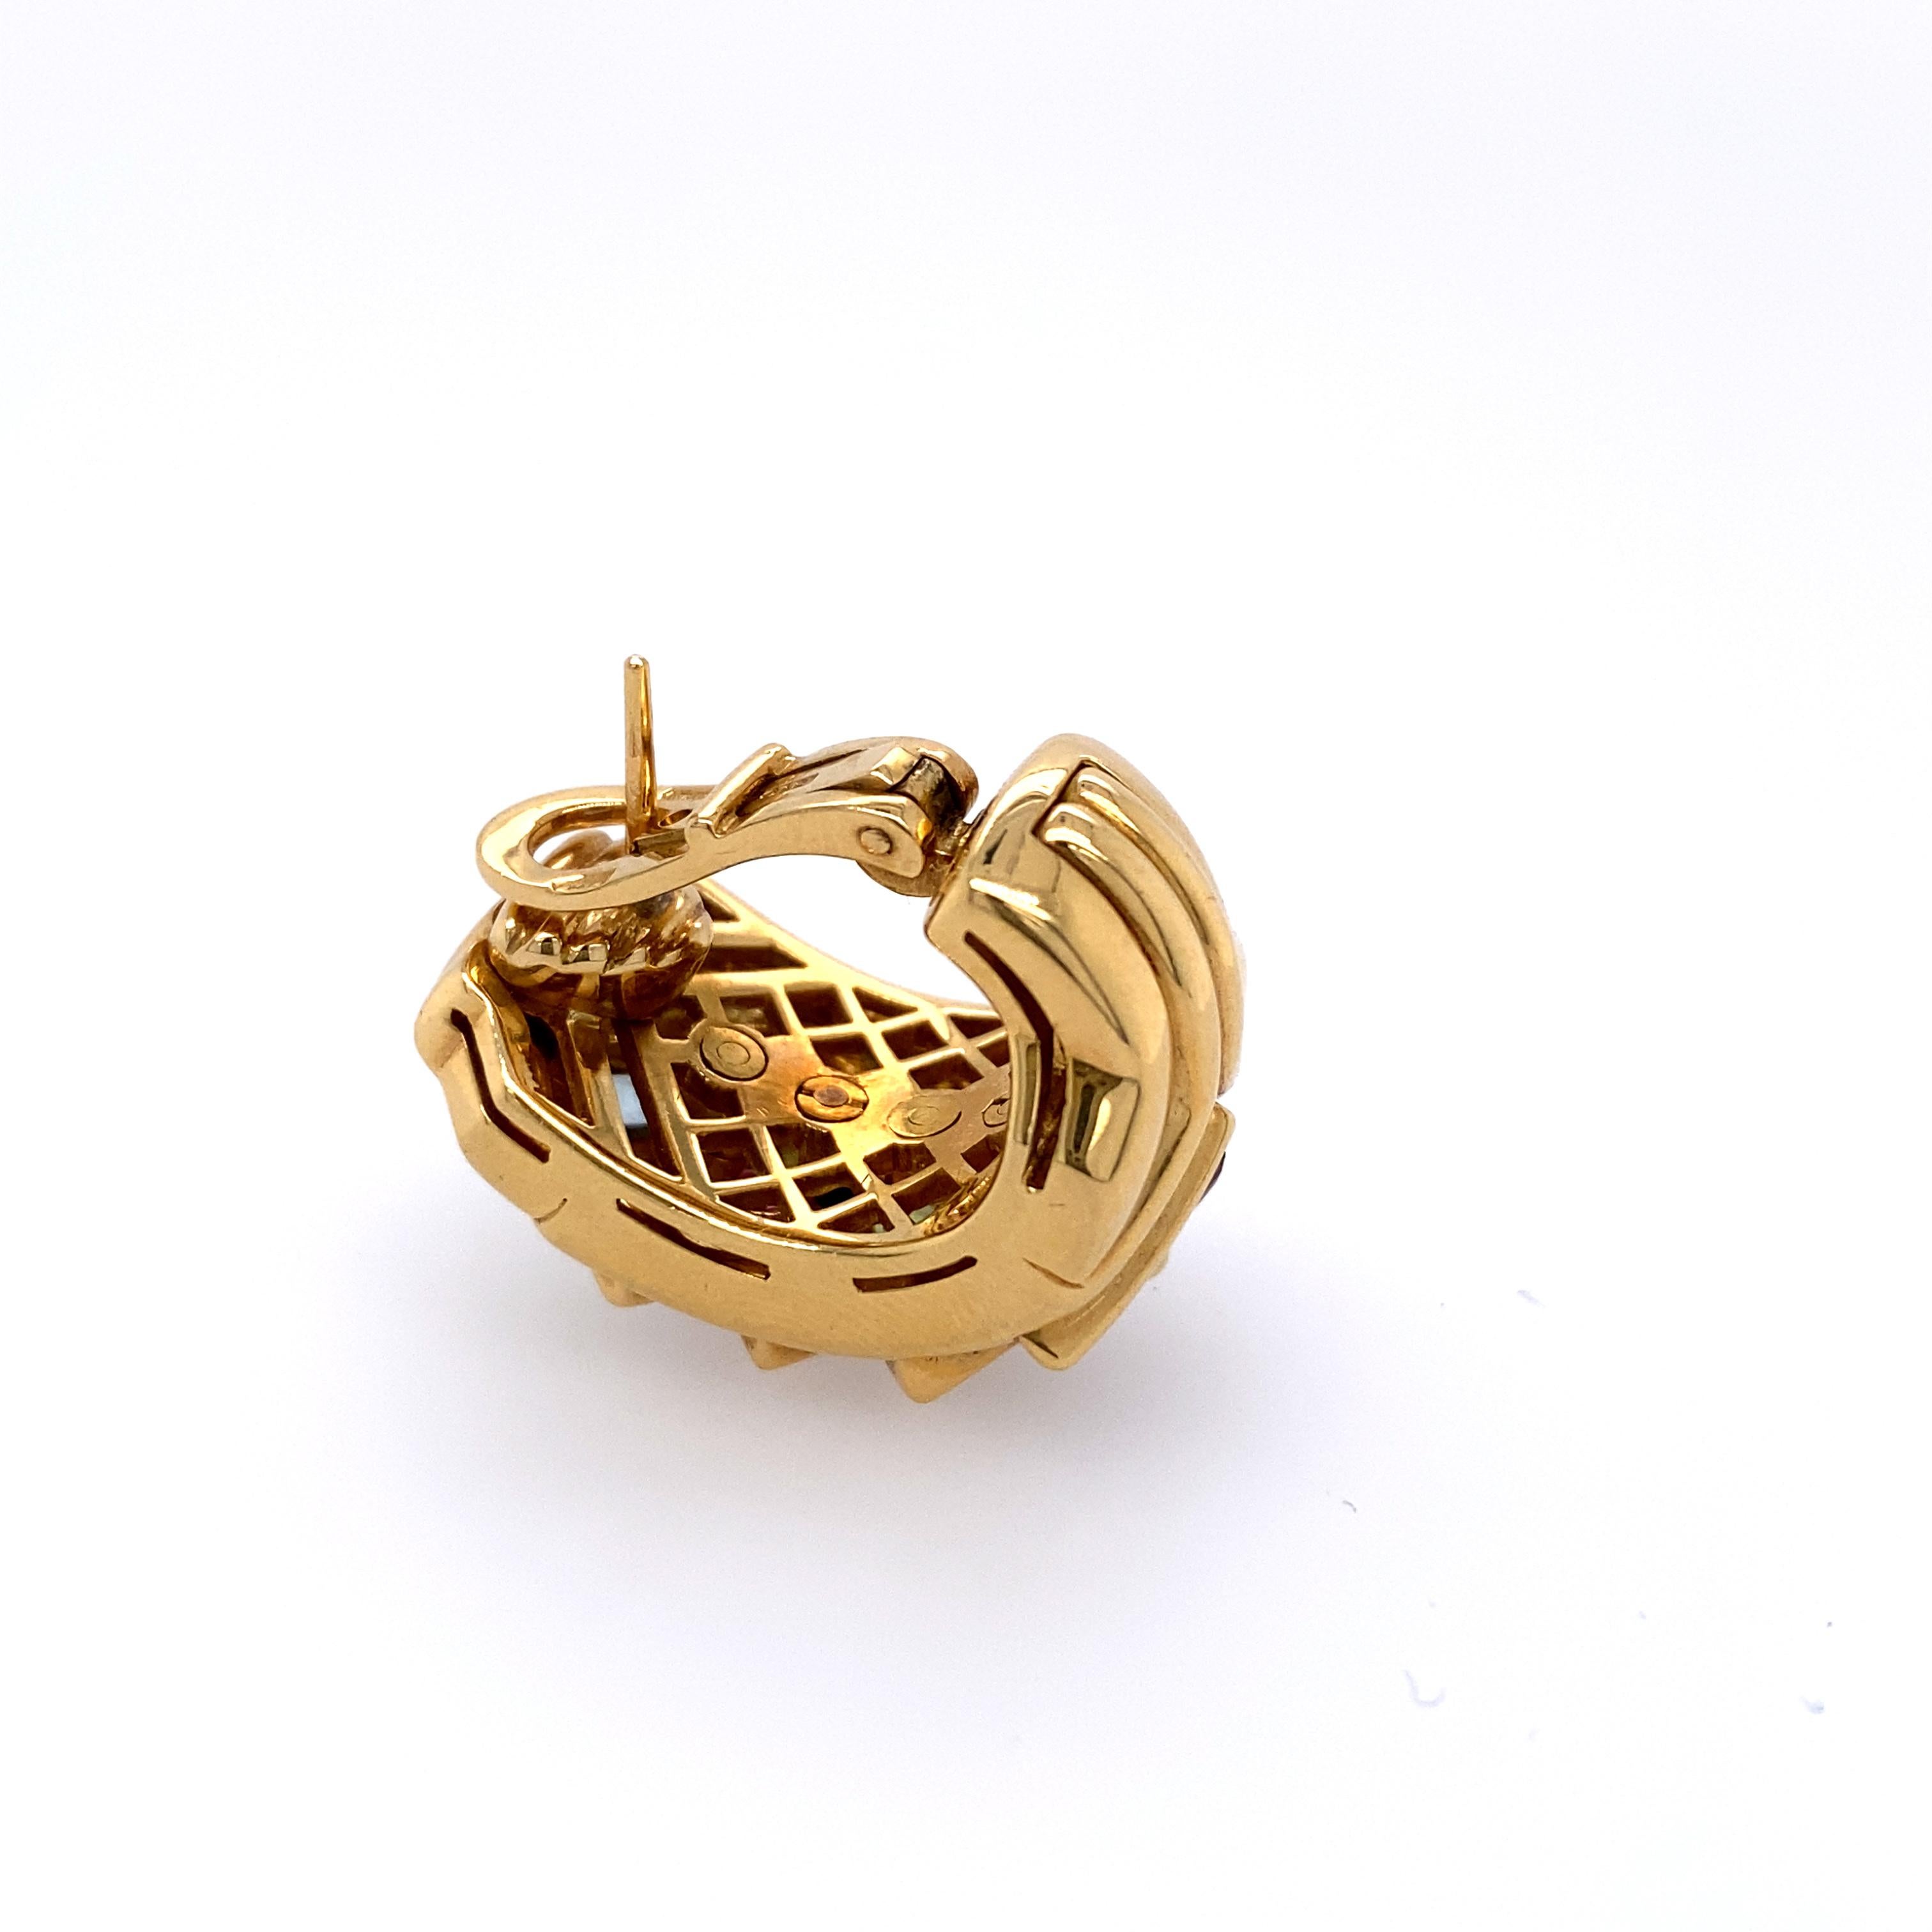 18k Gold Bvlgari earrings set in Amethyst , Peridot, Tourmaline & Aquamarine. 
Total weight 33.2 g  Measurements 13.70 mm x 23.65 mm